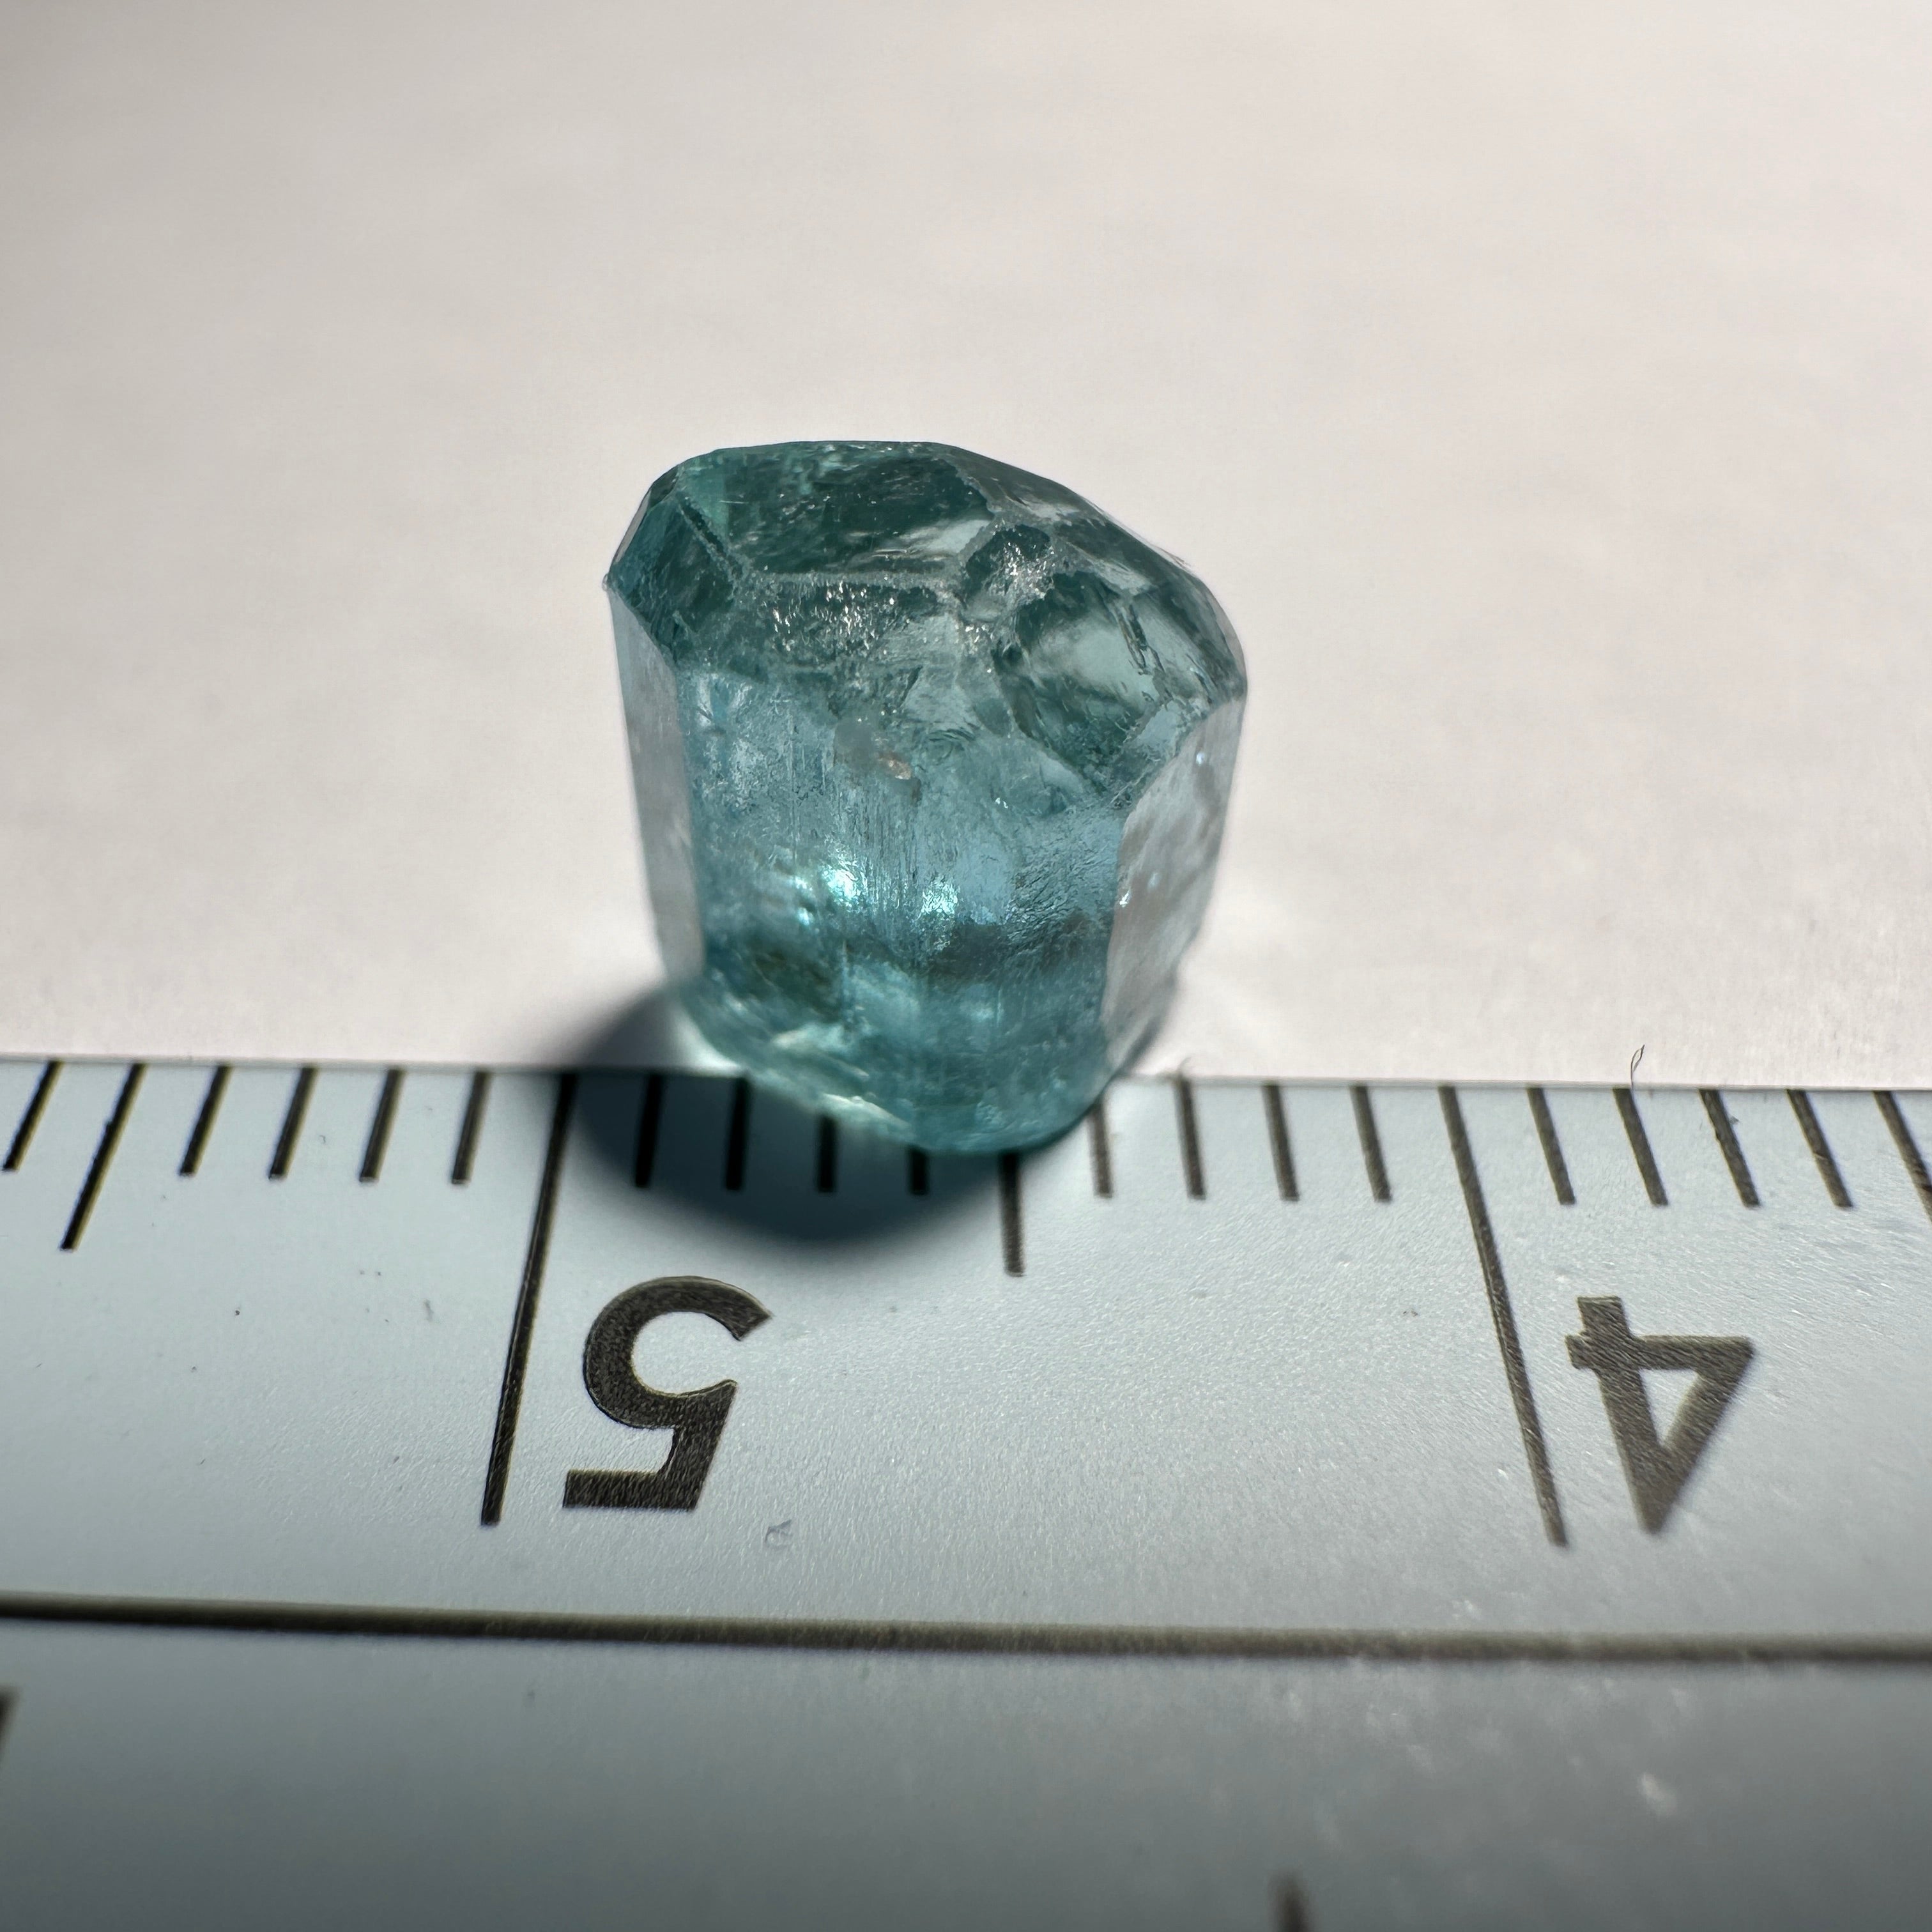 2.41ct Blue Apatite Crystal, Merelani, Tanzania, Untreated Unheated